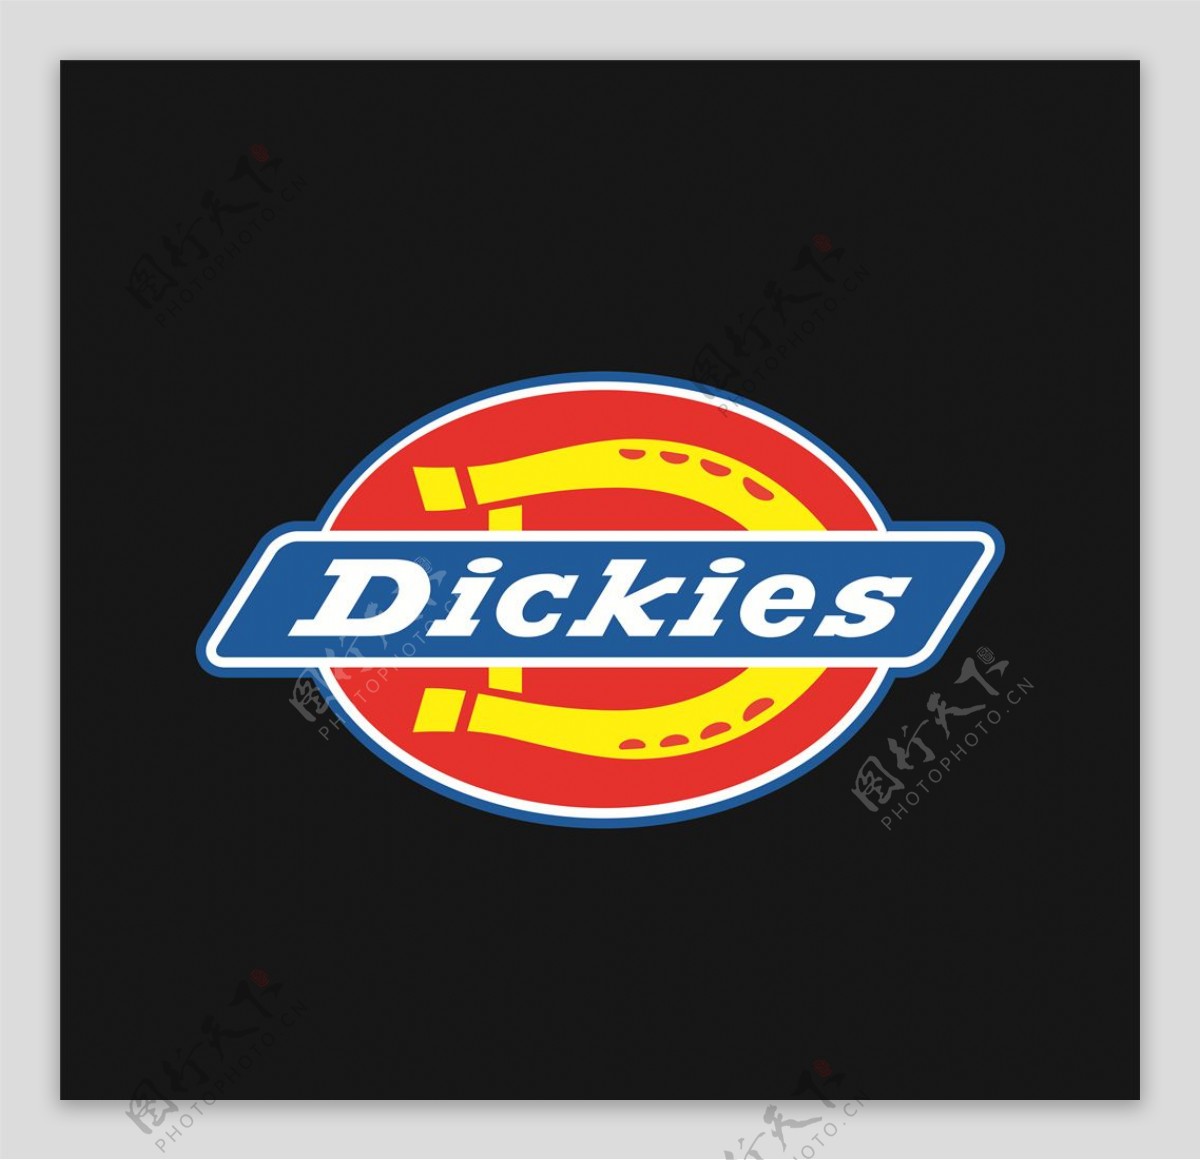 Dickies标志